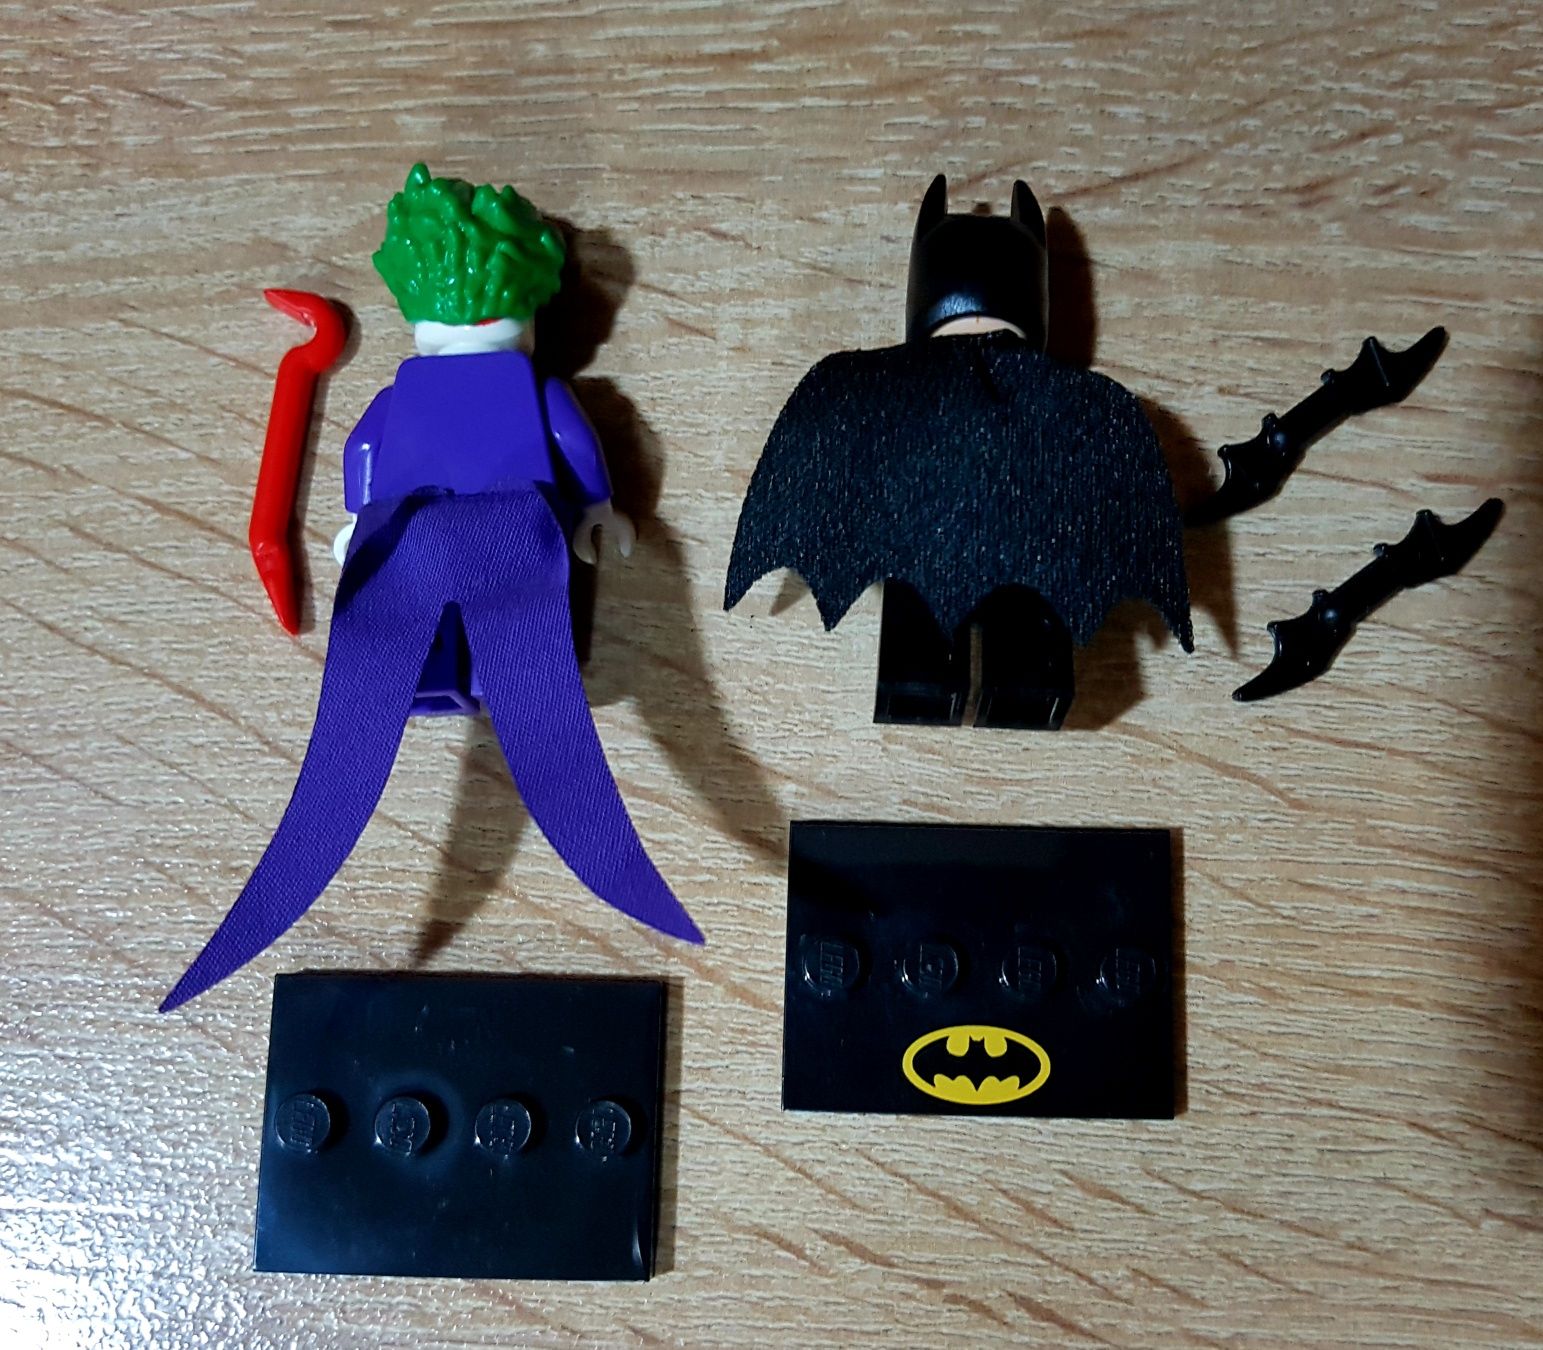 Lego Batman & Joker minifigurine si 2 seturi